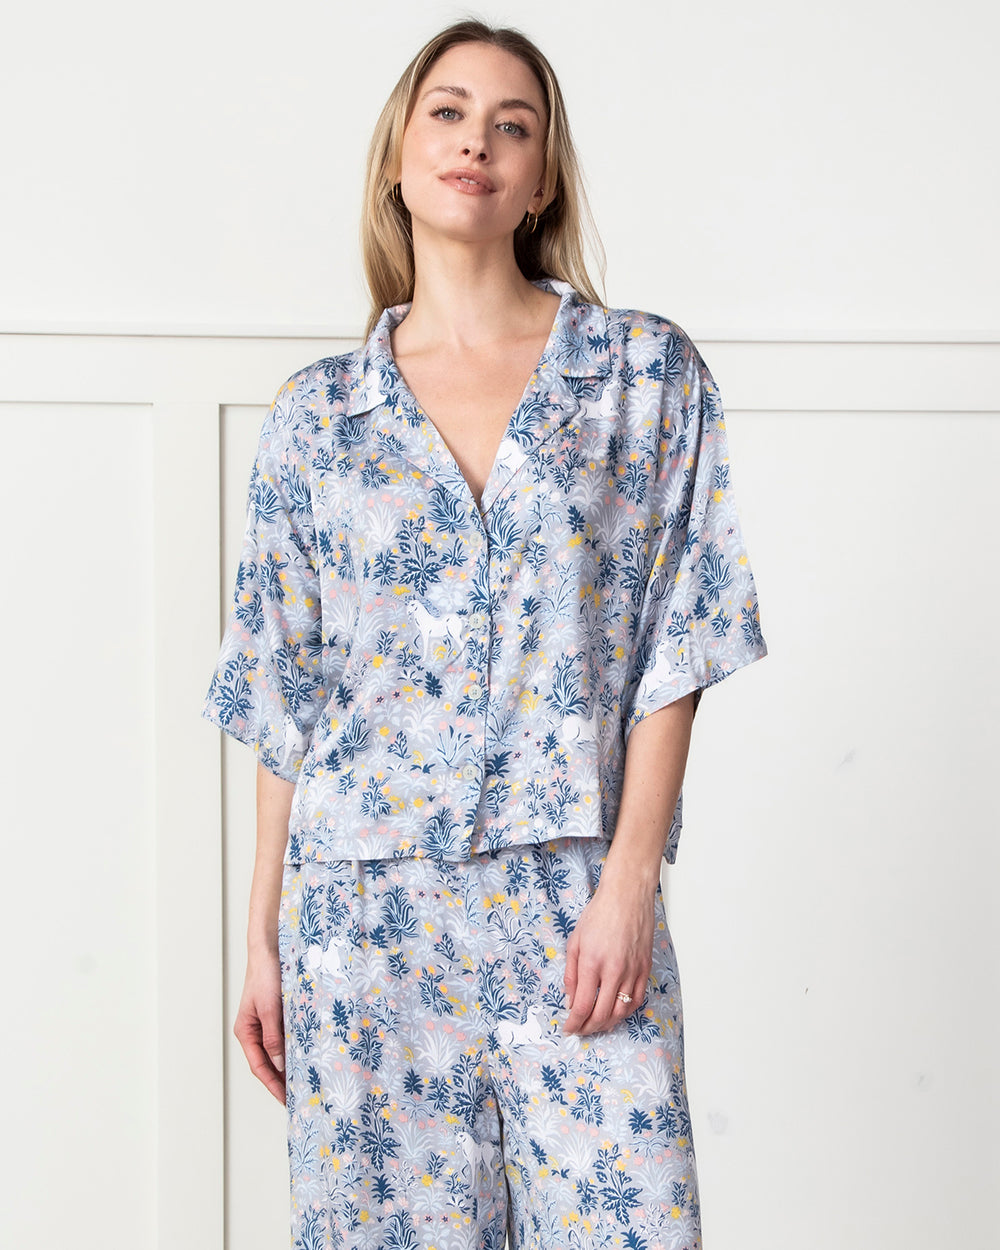 Silk Sleepwear & Pyjamas, Nighties, Robes & PJ Sets